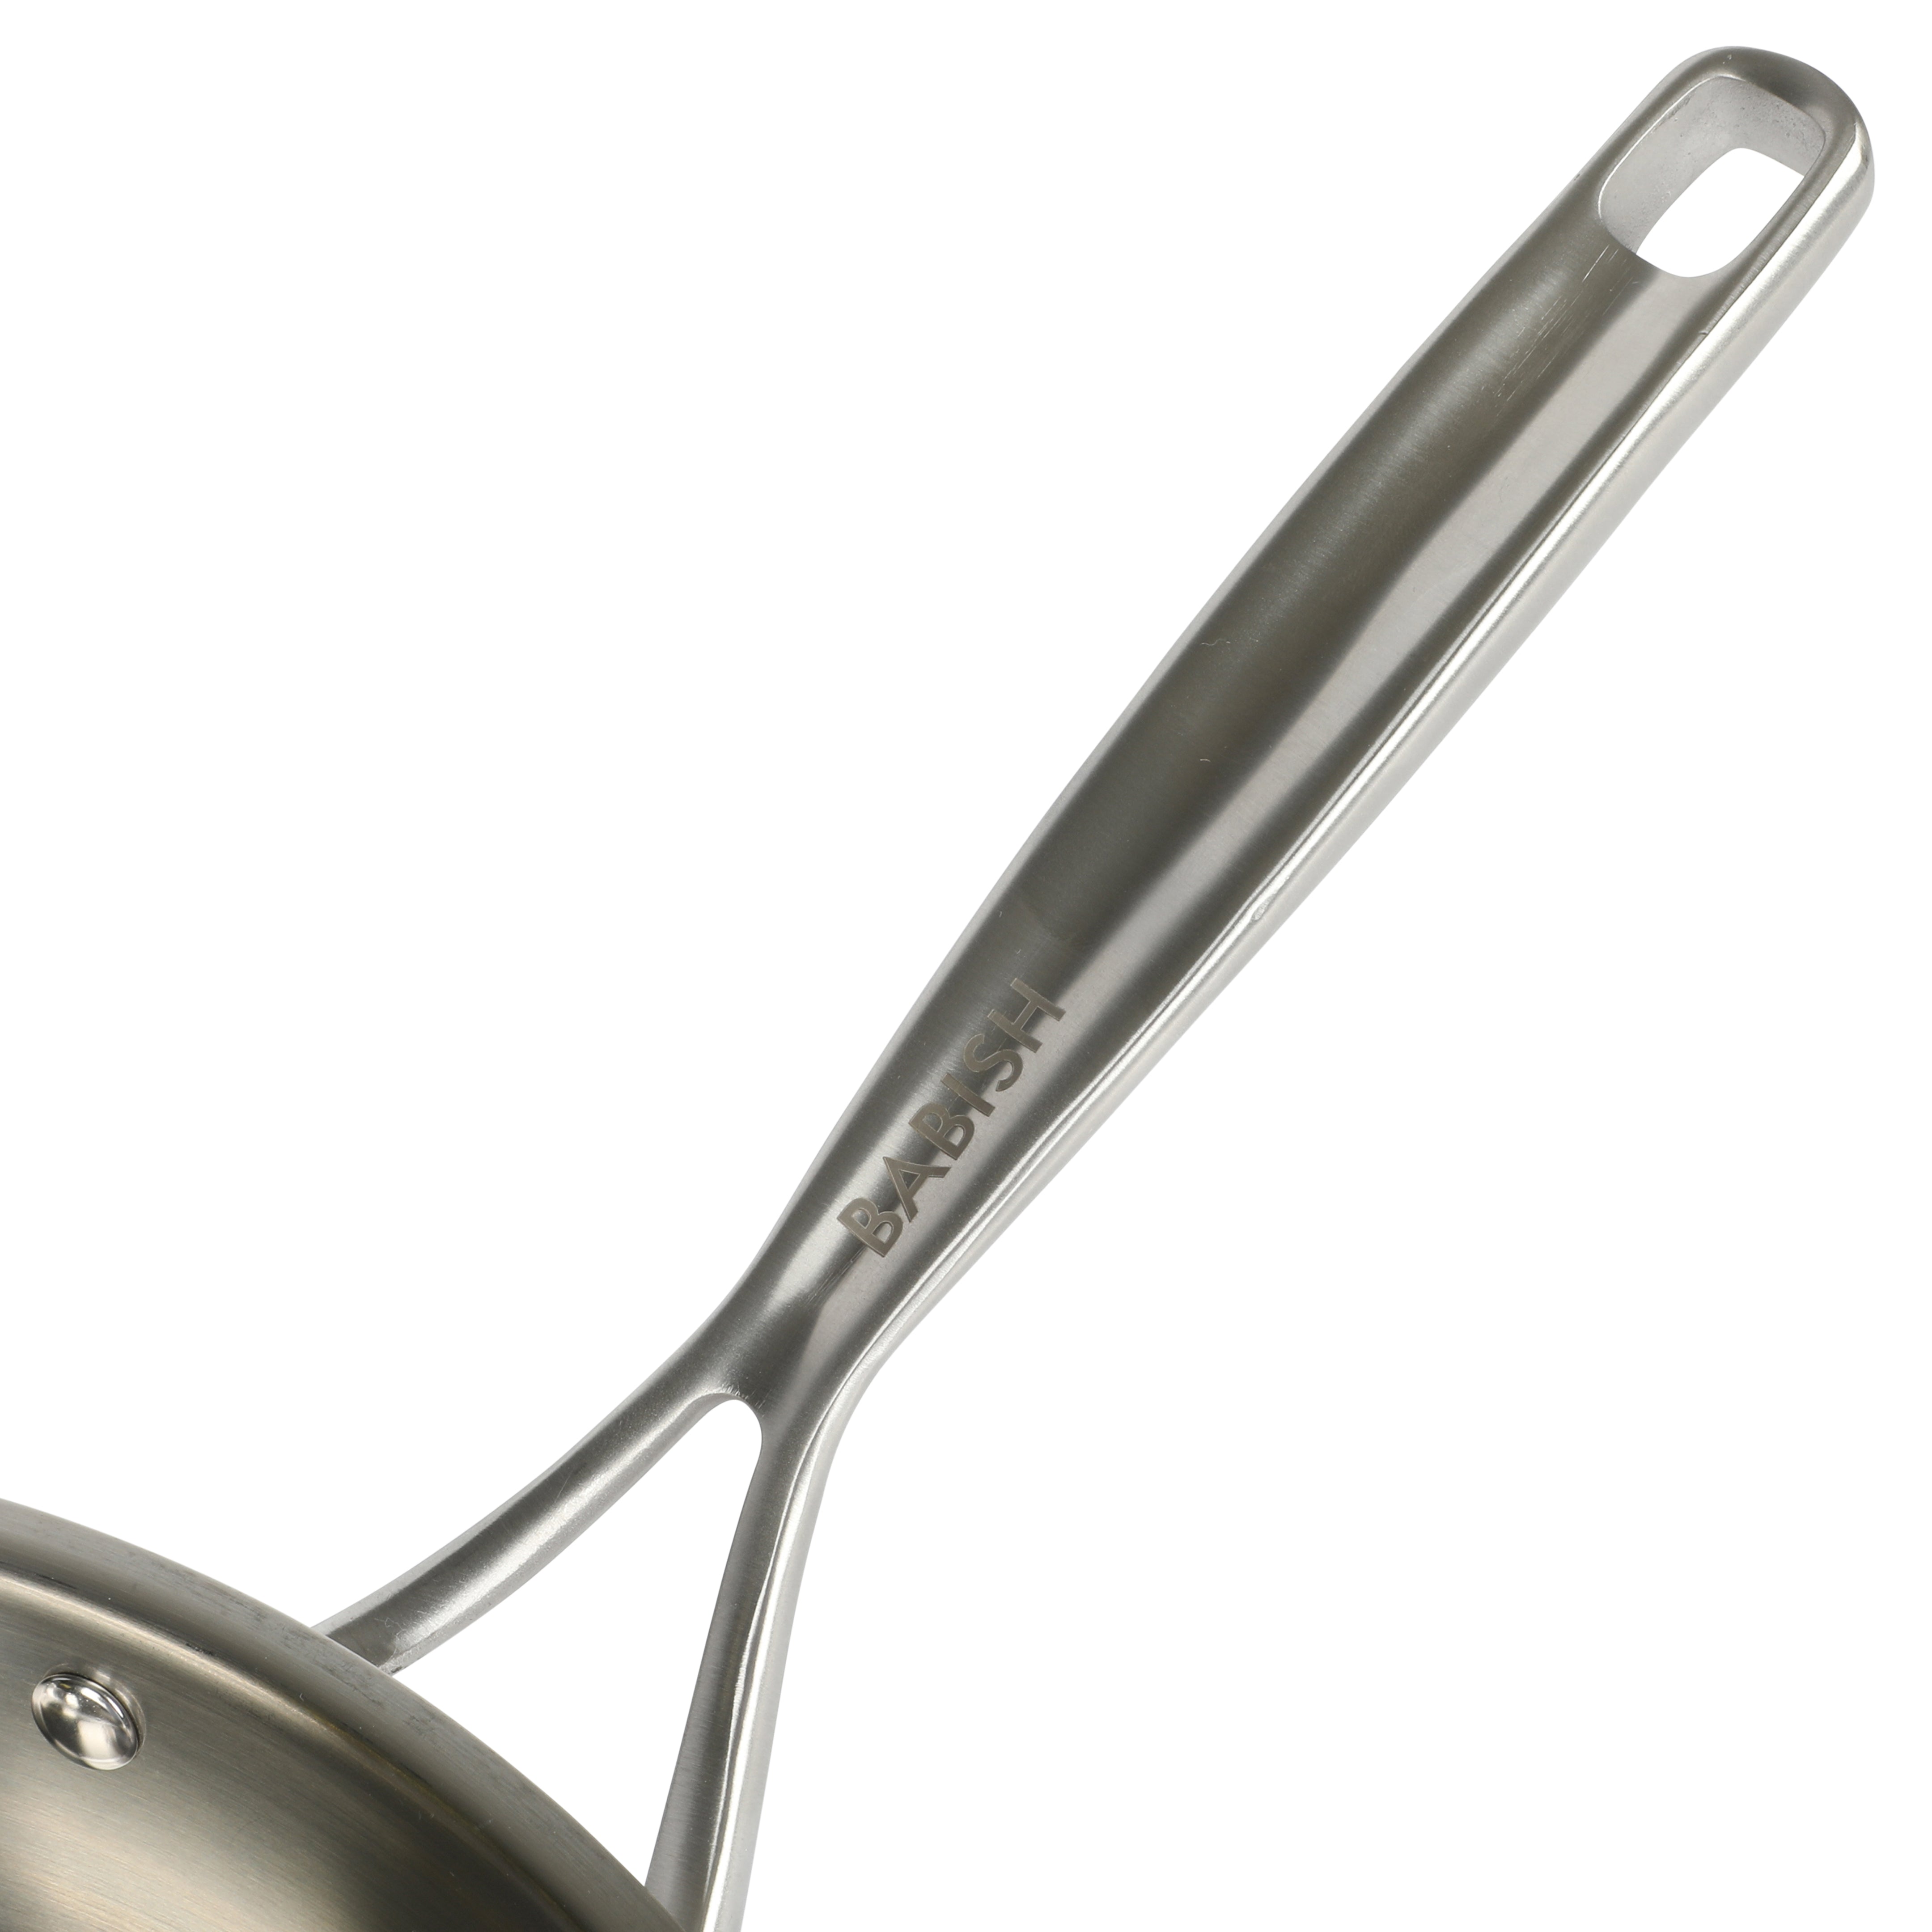 Tramontina Professional Aluminum 12 inch Non-Stick Fry Pan, Silver